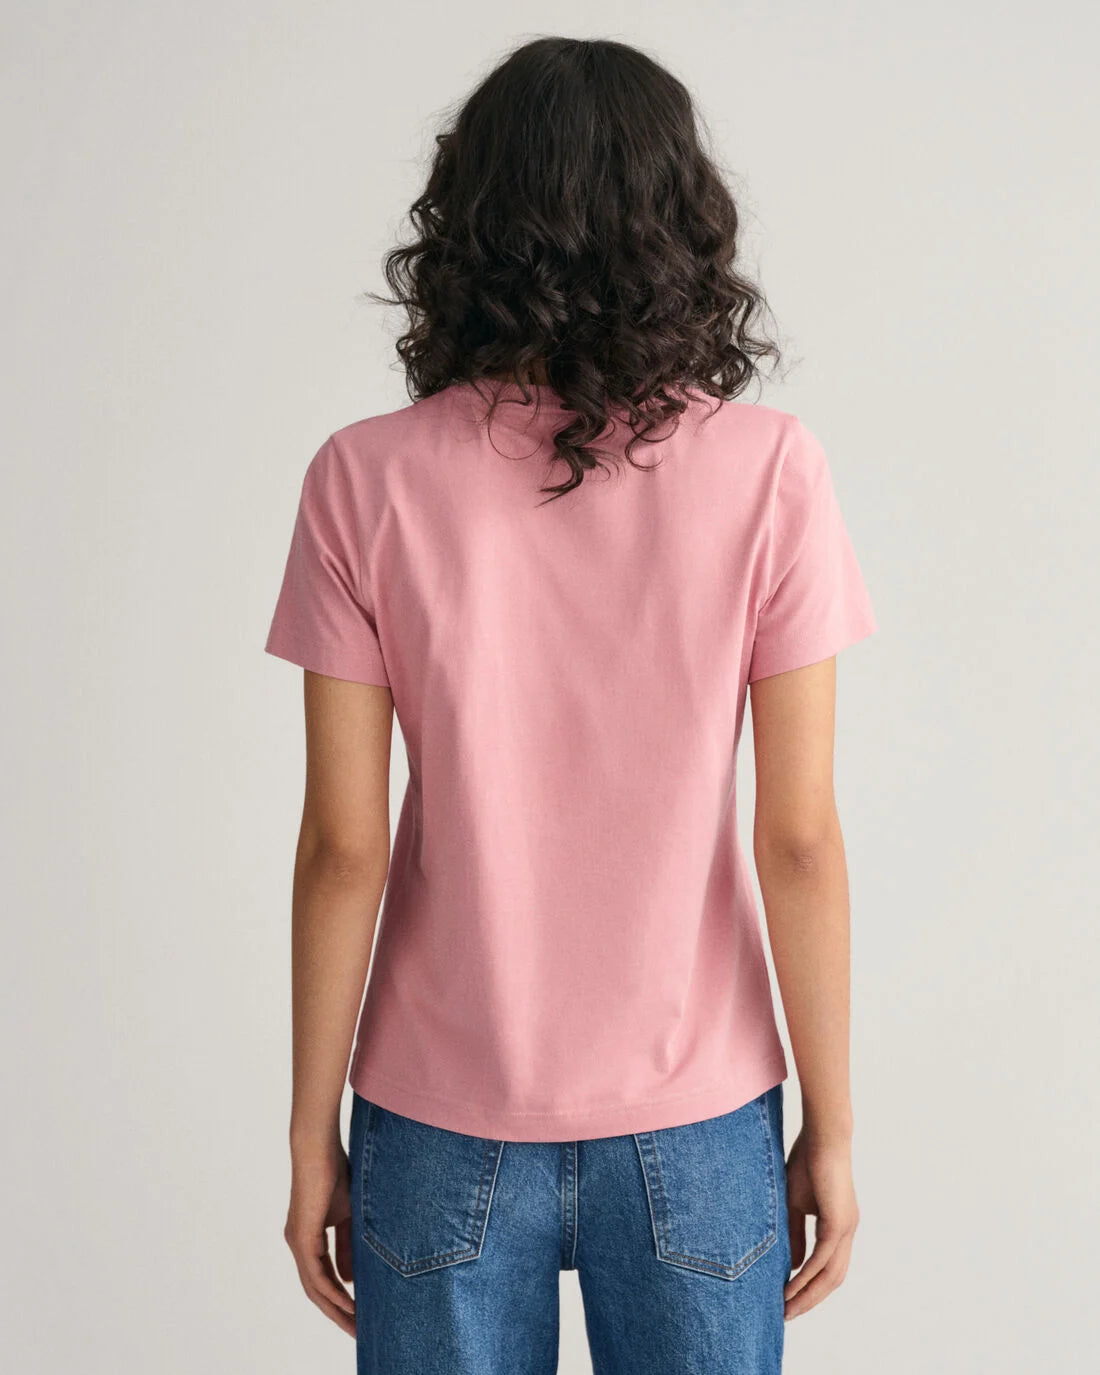 Tonal Archive Shield T-Shirt - Faded Pink Melange